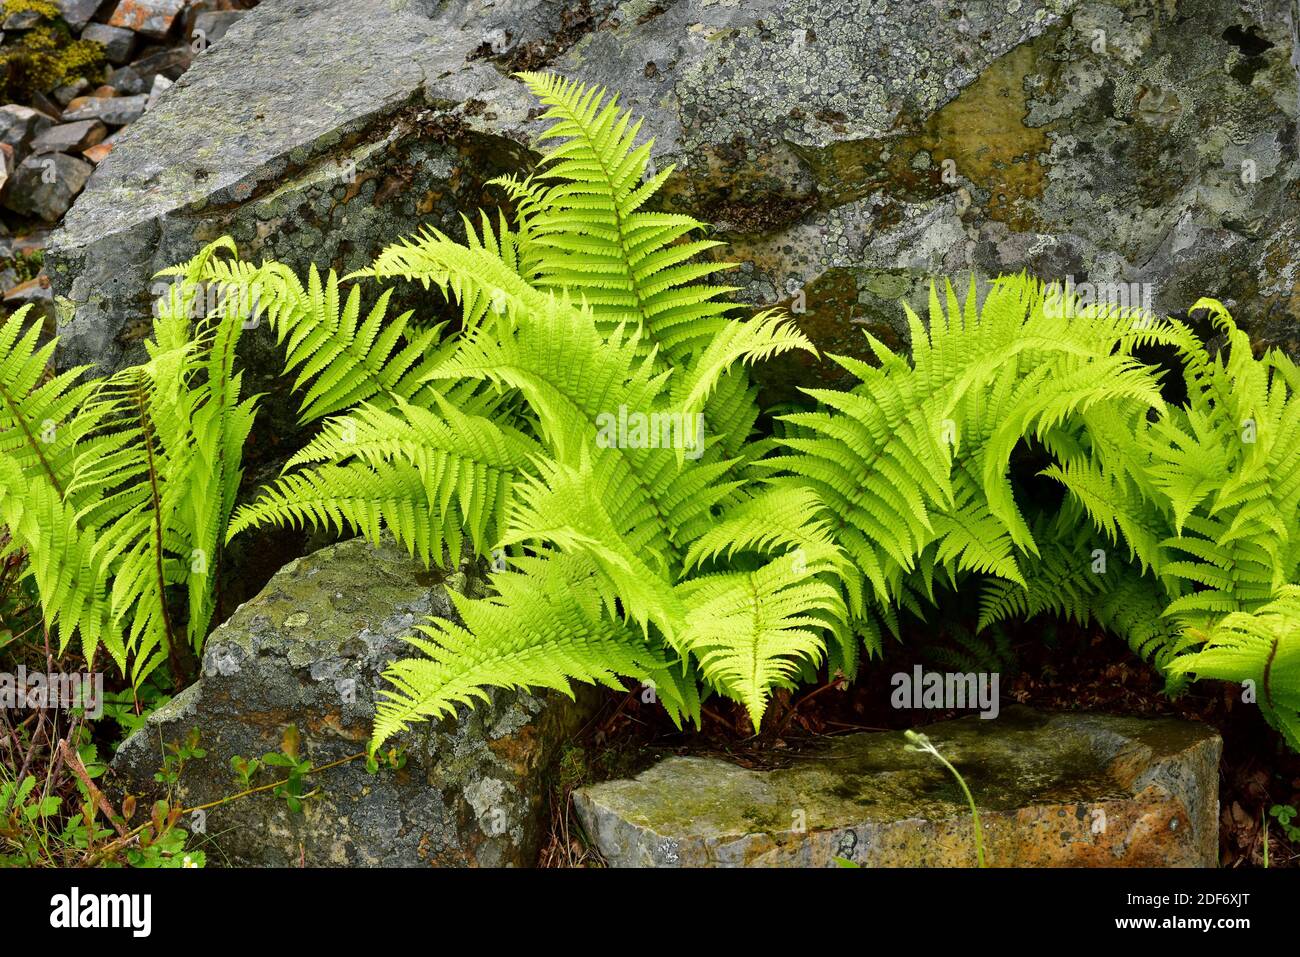 Male fern (Dryopteris filix-mas) is a fern native to Northern Hemisphere. This photo was taken in Muniellos Biosphere Reserve, Asturias, Spain. Stock Photo